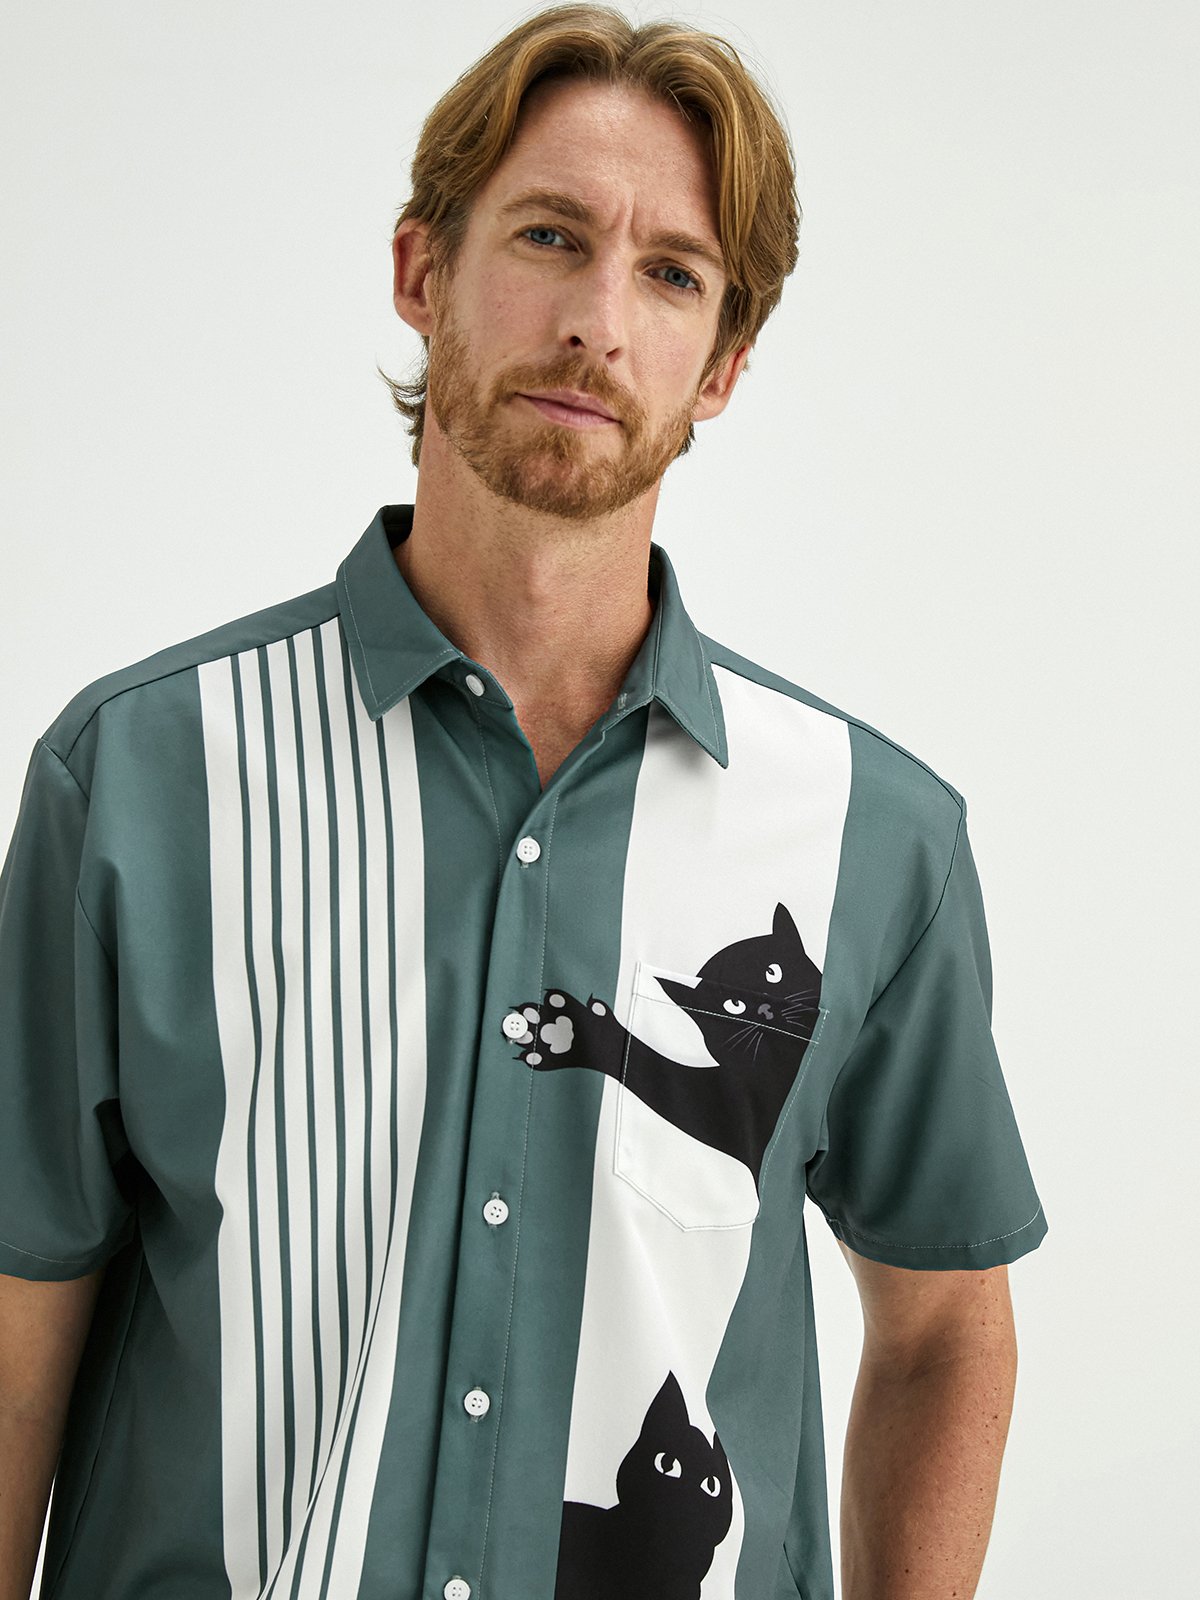 Hardaddy Cat Chest Pocket Short Sleeve Bowling Shirt